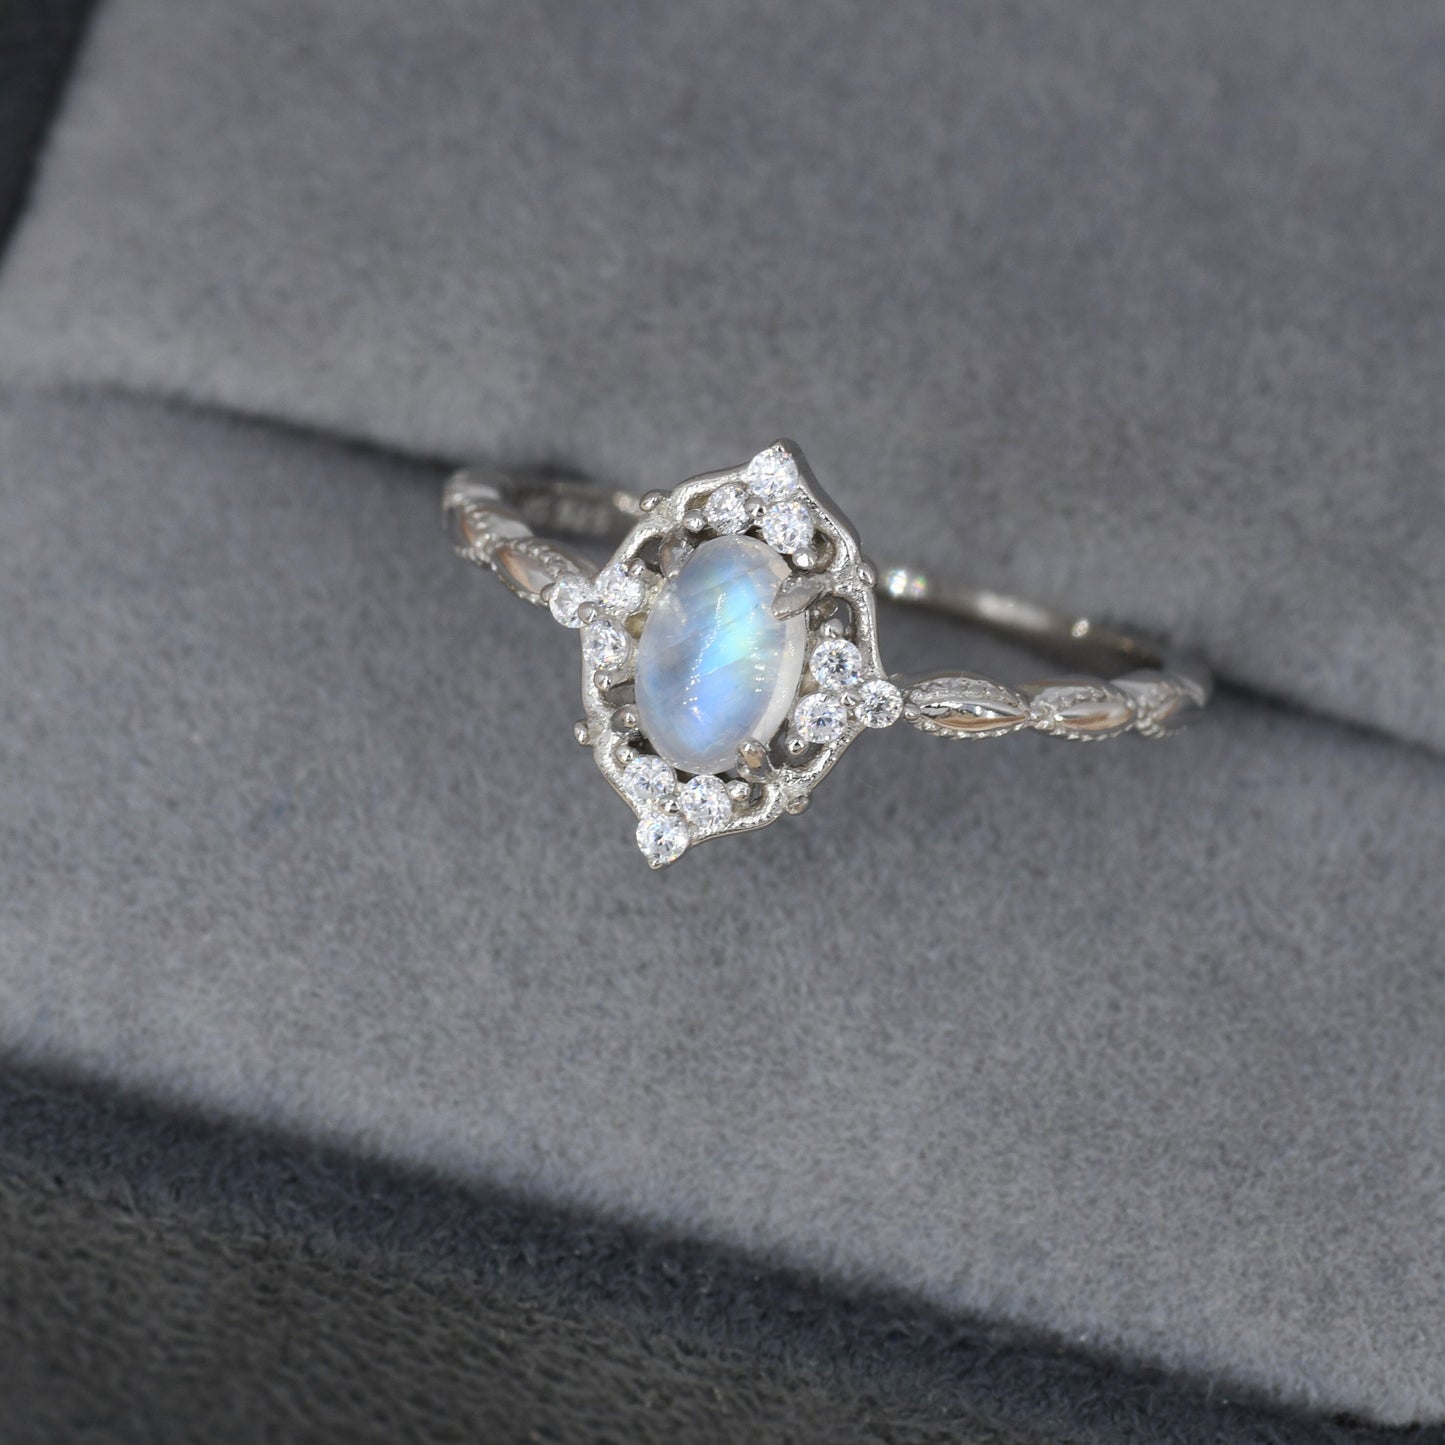 Genuine Moonstone Ring in Sterling Silver, Natural Moonstone Ring, Vintage Inspired Design, US 6 - 8